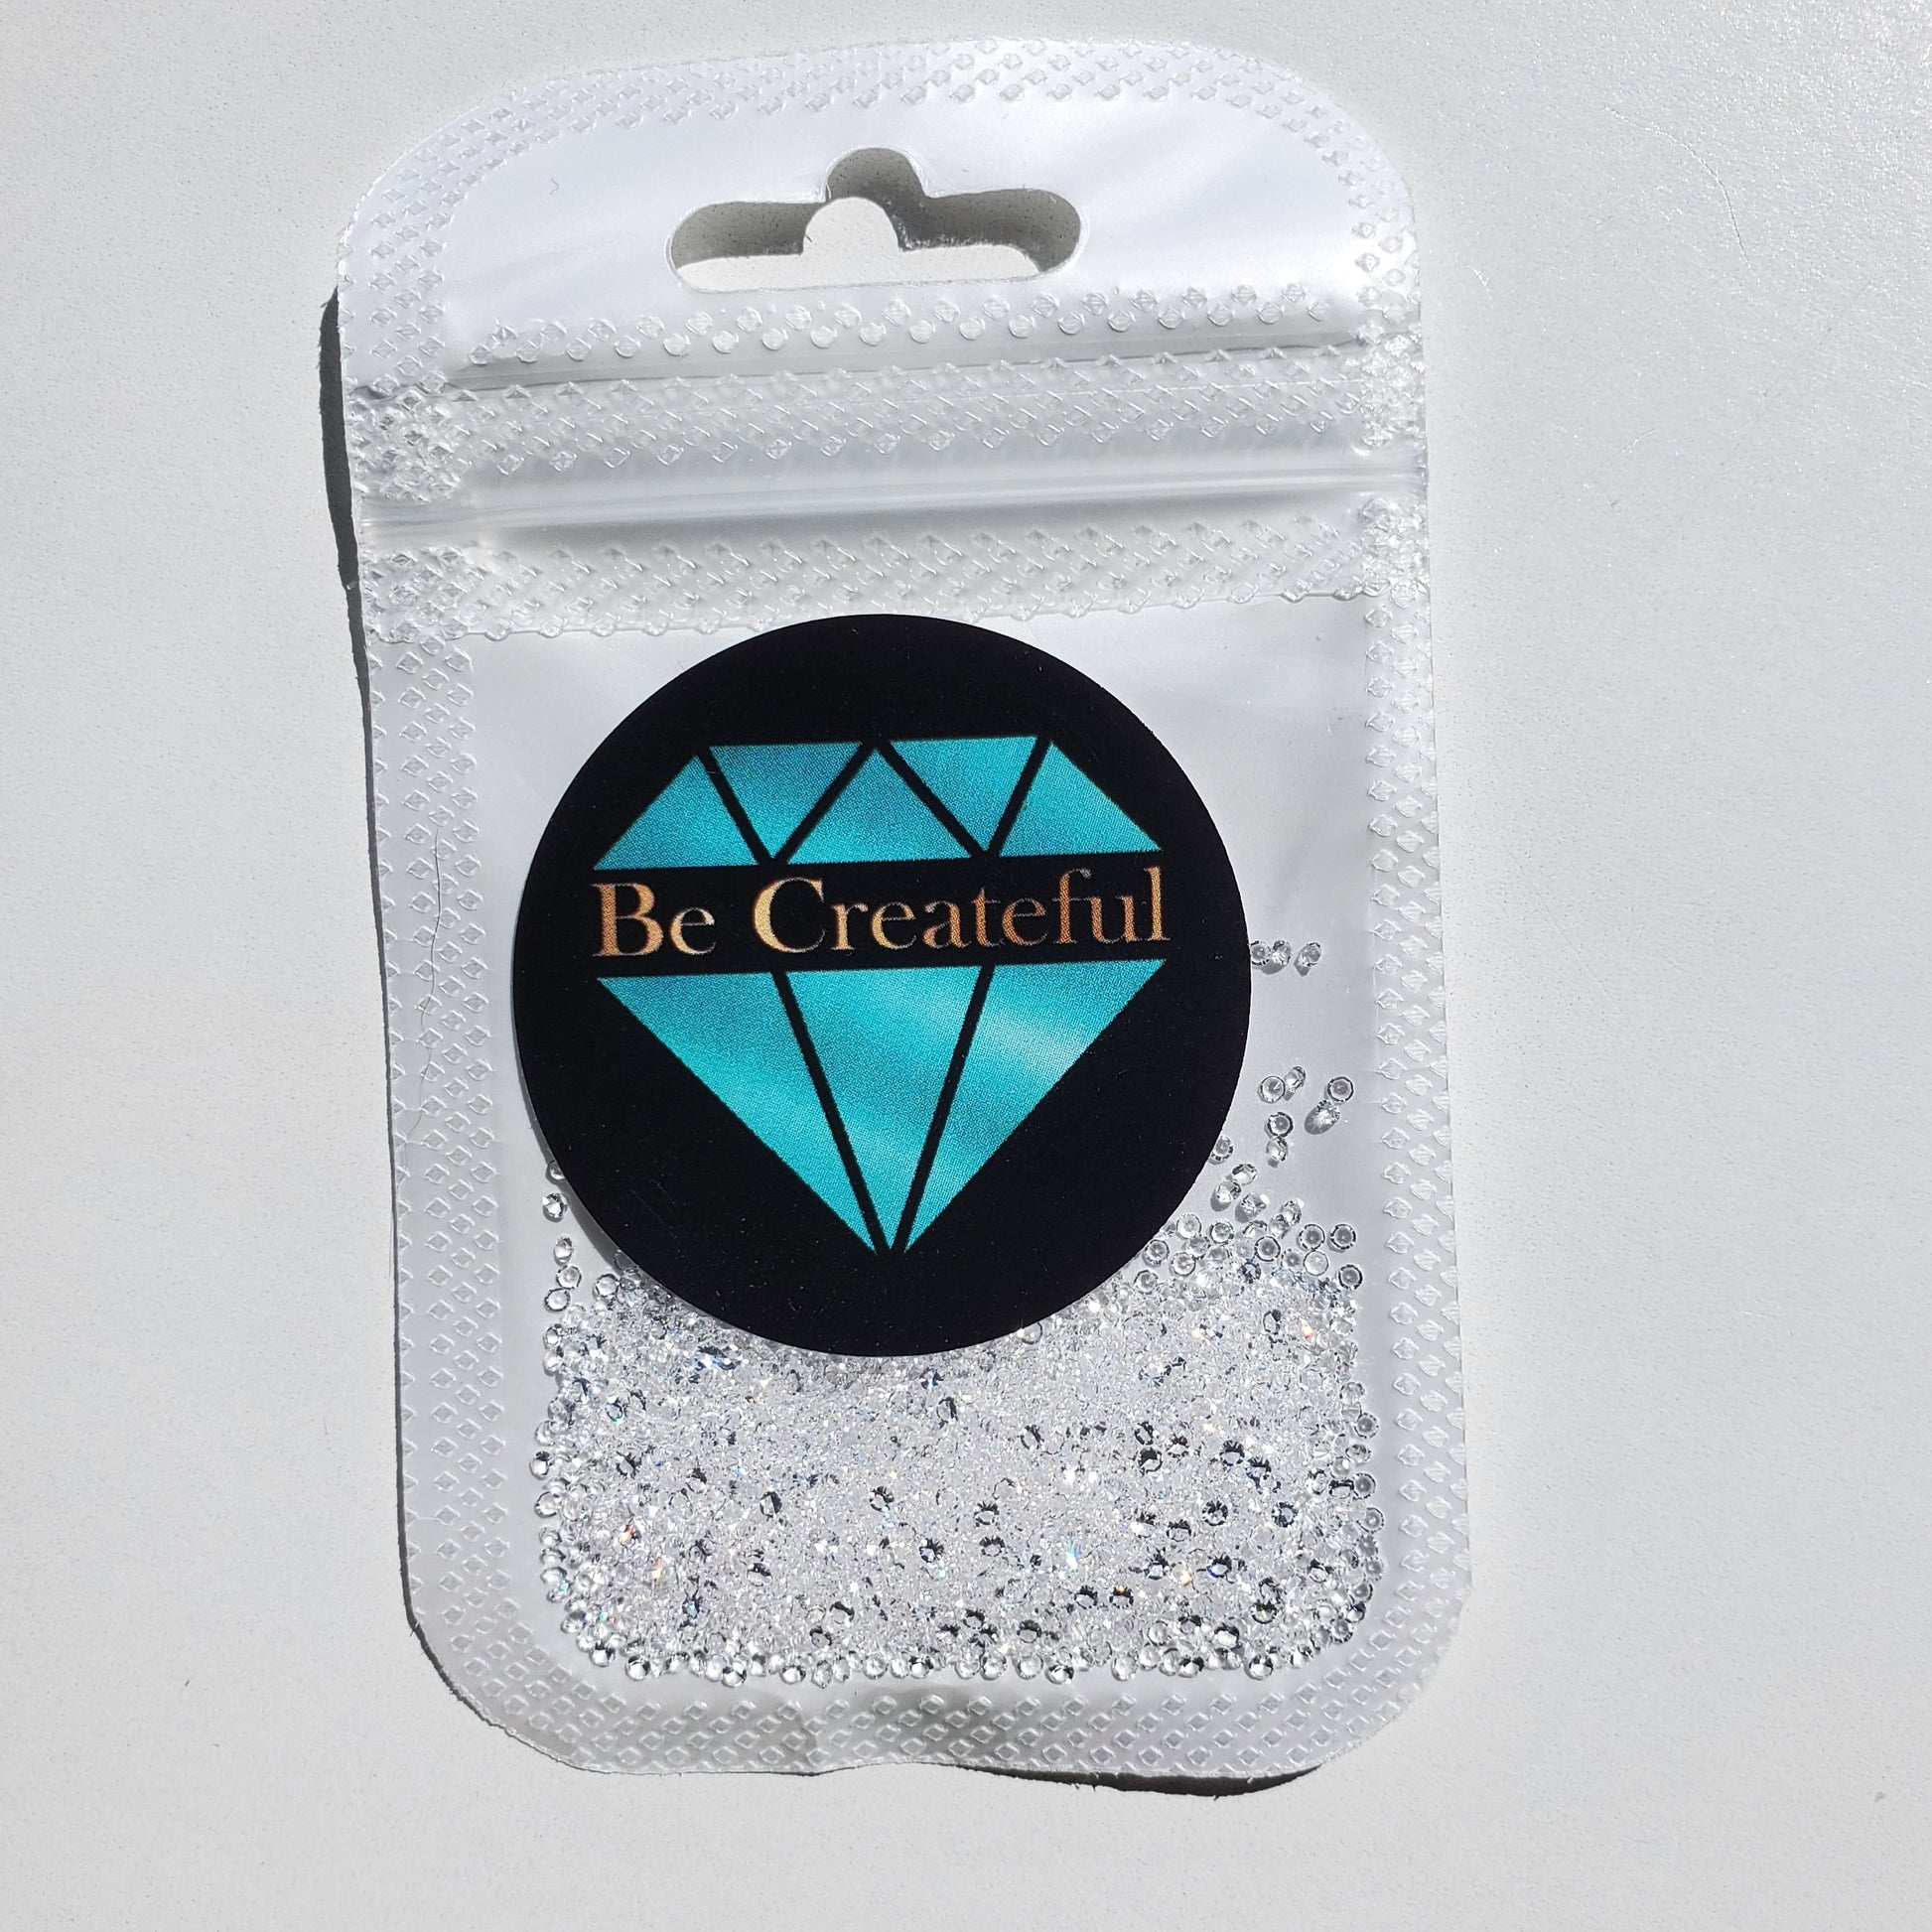 Be Createful - Flatback Foil Crystal Glass Rhinestones